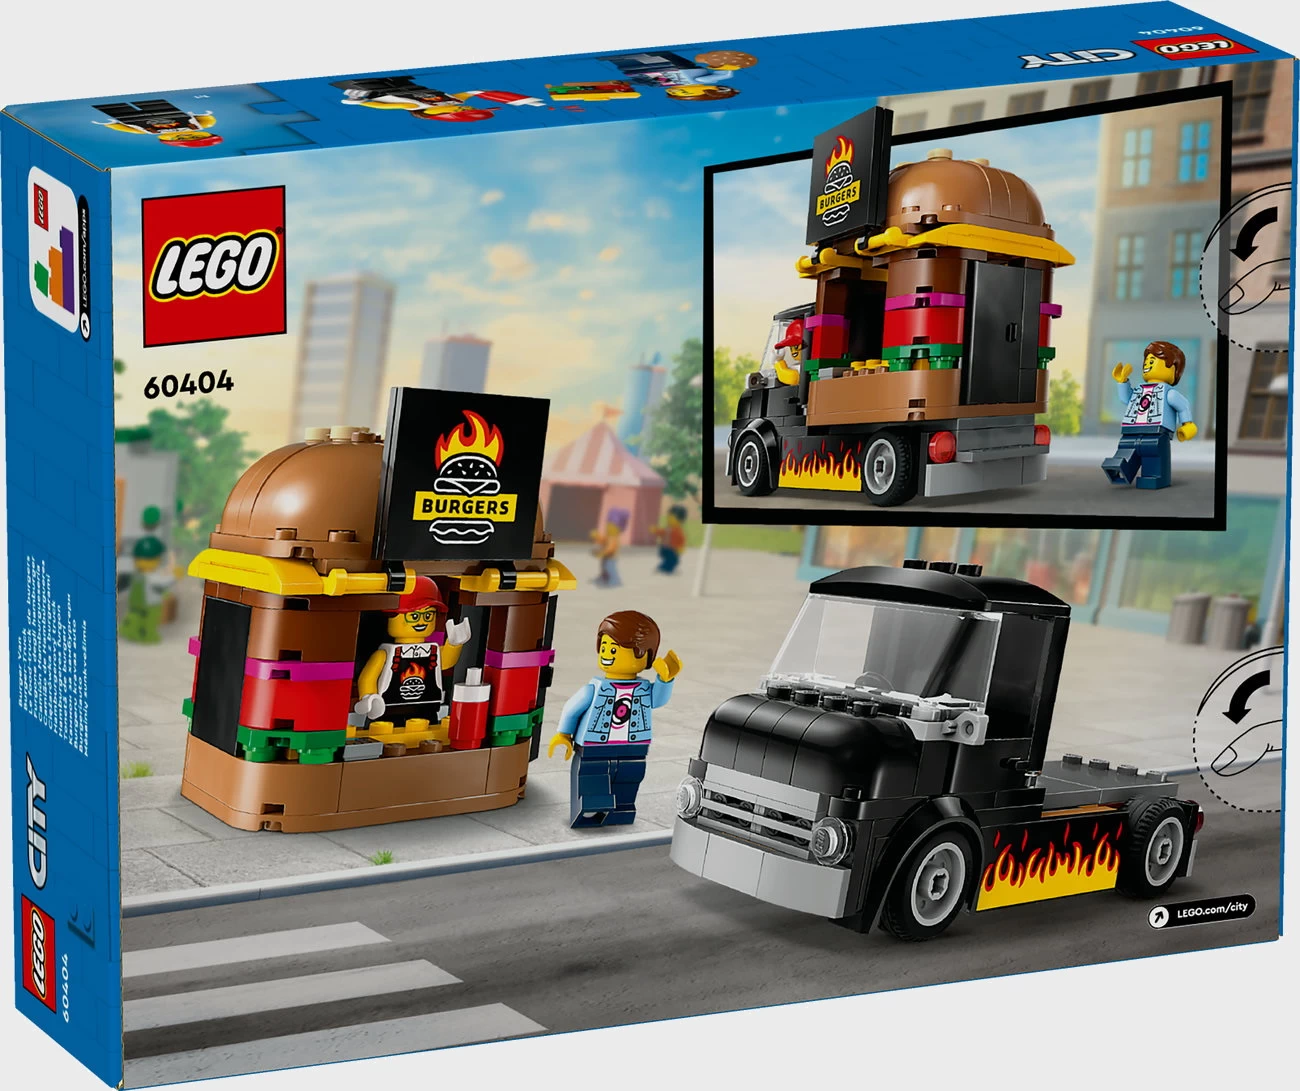 LEGO City 60404 - Burger-Truck